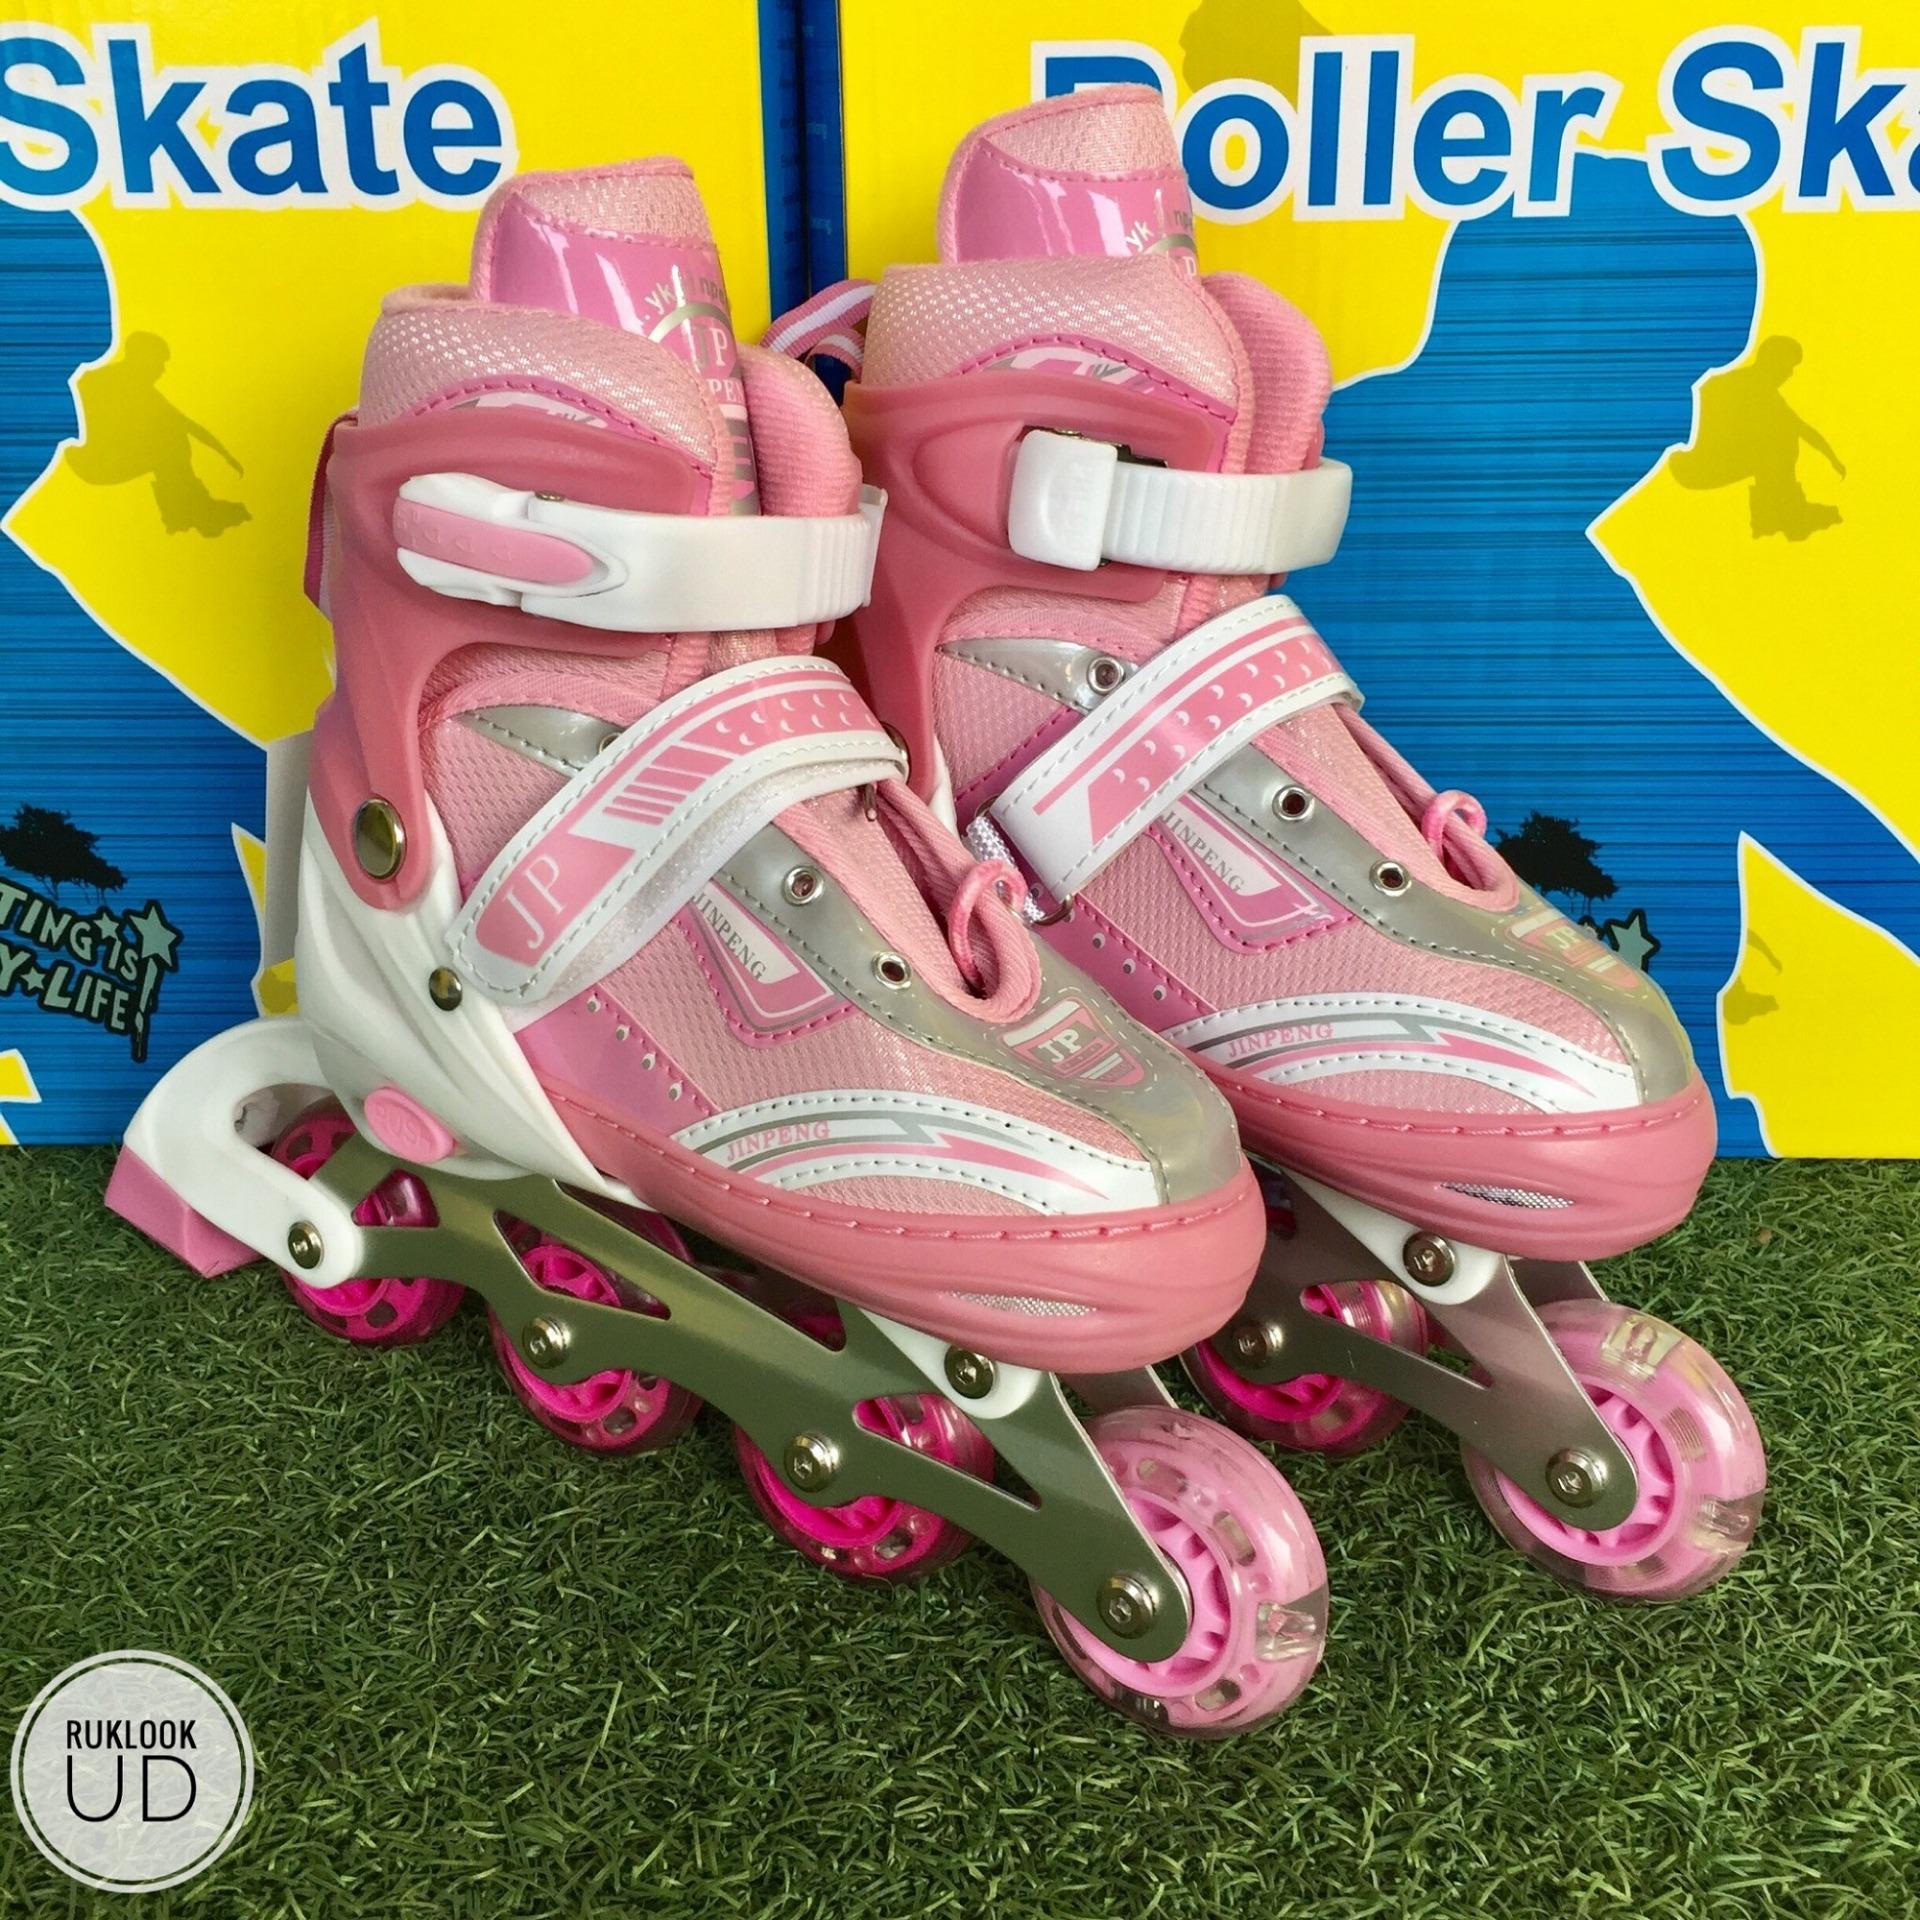 Lion รองเท้าสเก็ต Roller Blade Skate (Size M 35-38) สีชมพู